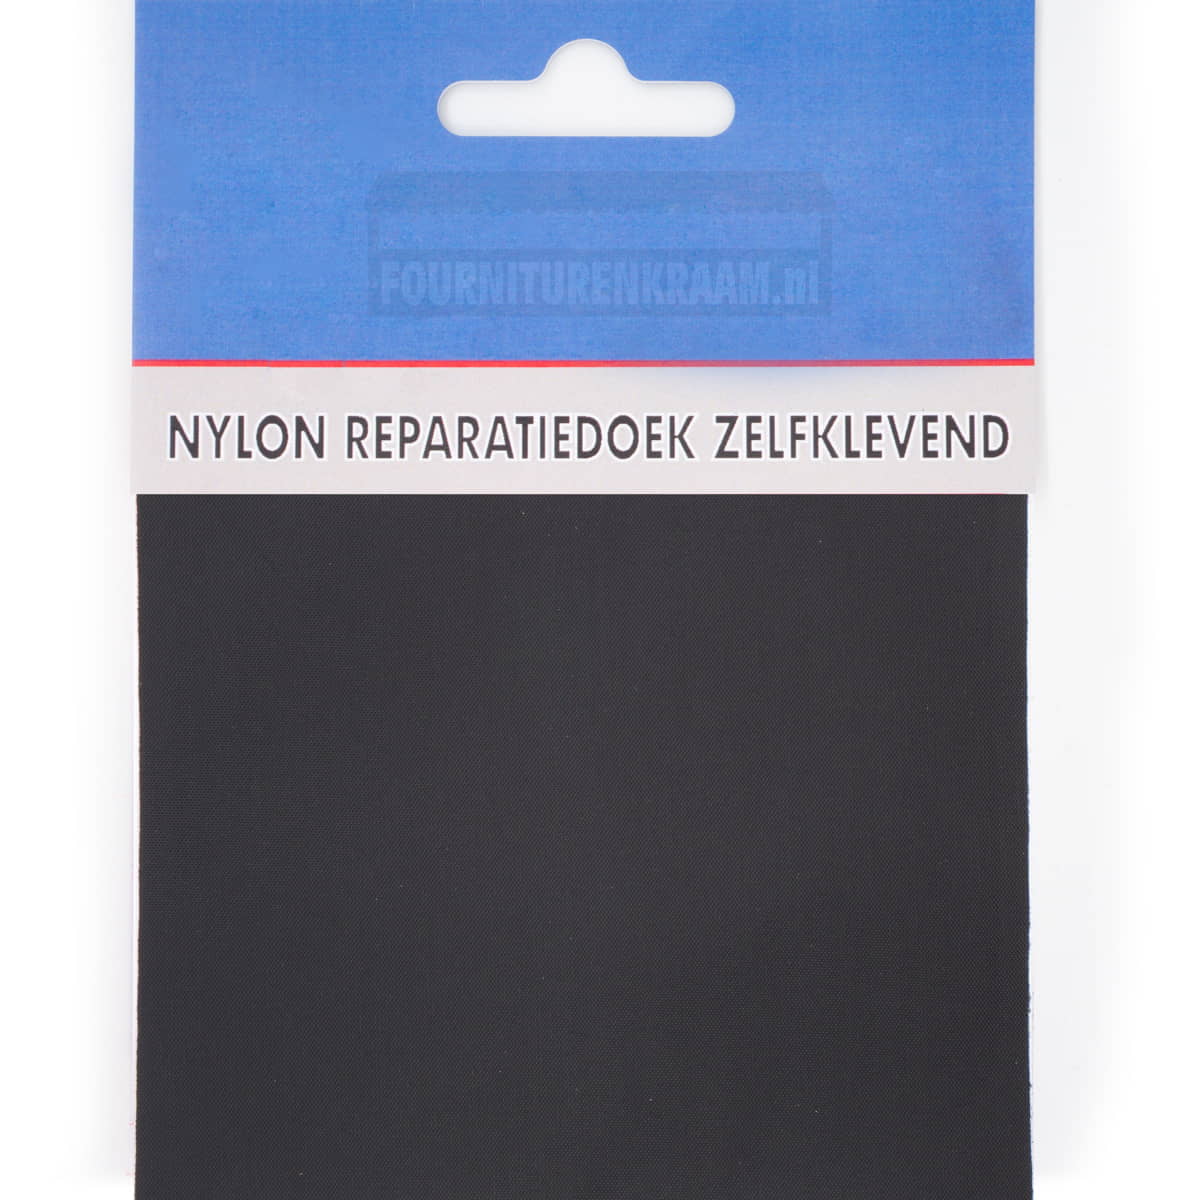 Zelfklevend repartiedoek huismerk | Nylon | 10 x 20 cm | Zwart NYLON-1114-01